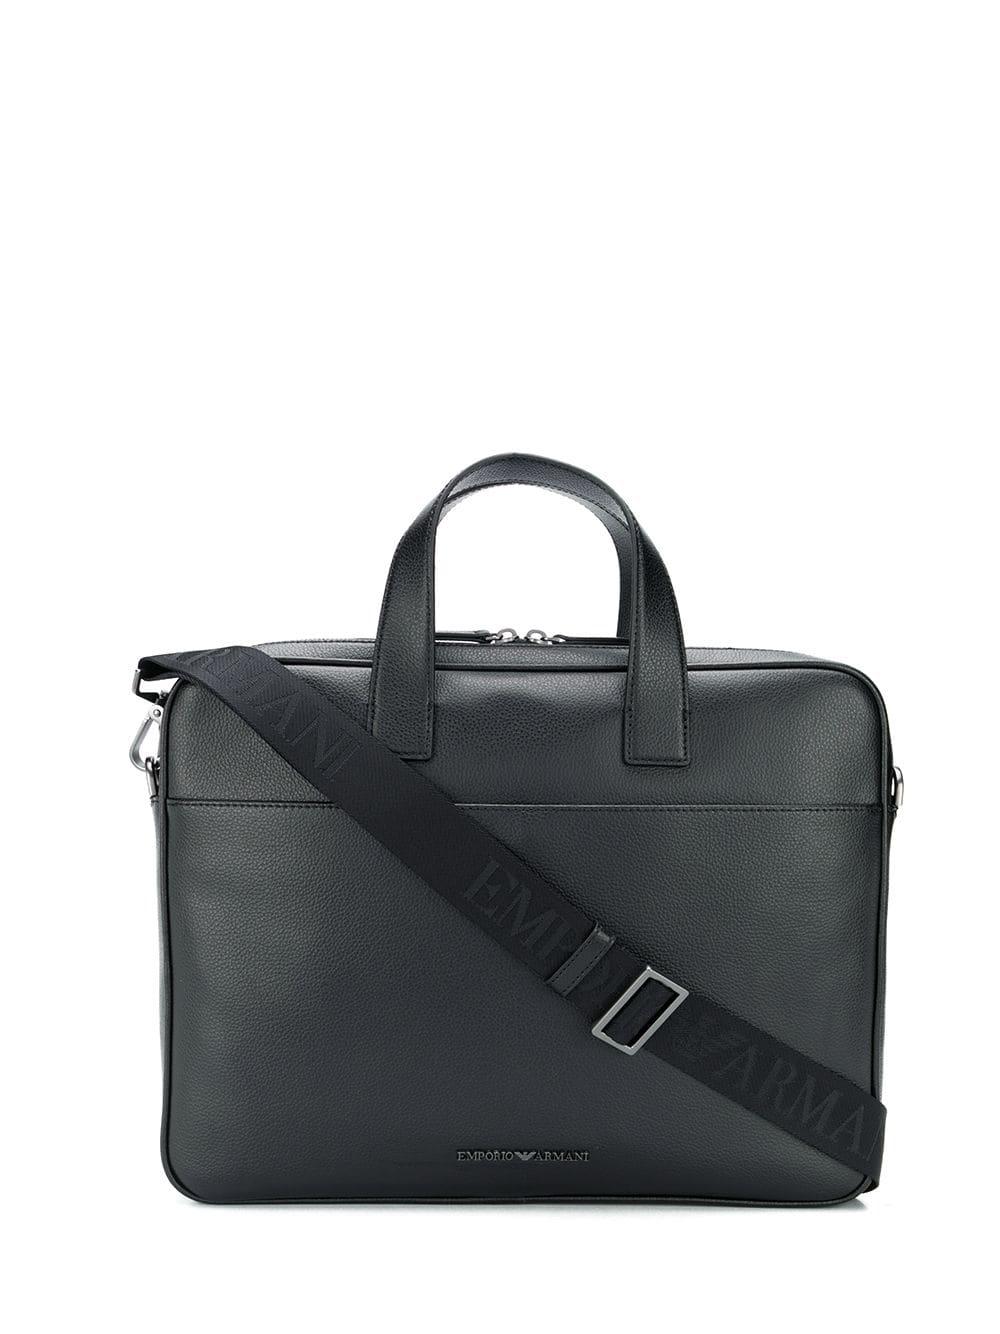 Emporio Armani Leather Plain Briefcase Bag in Black for Men - Lyst